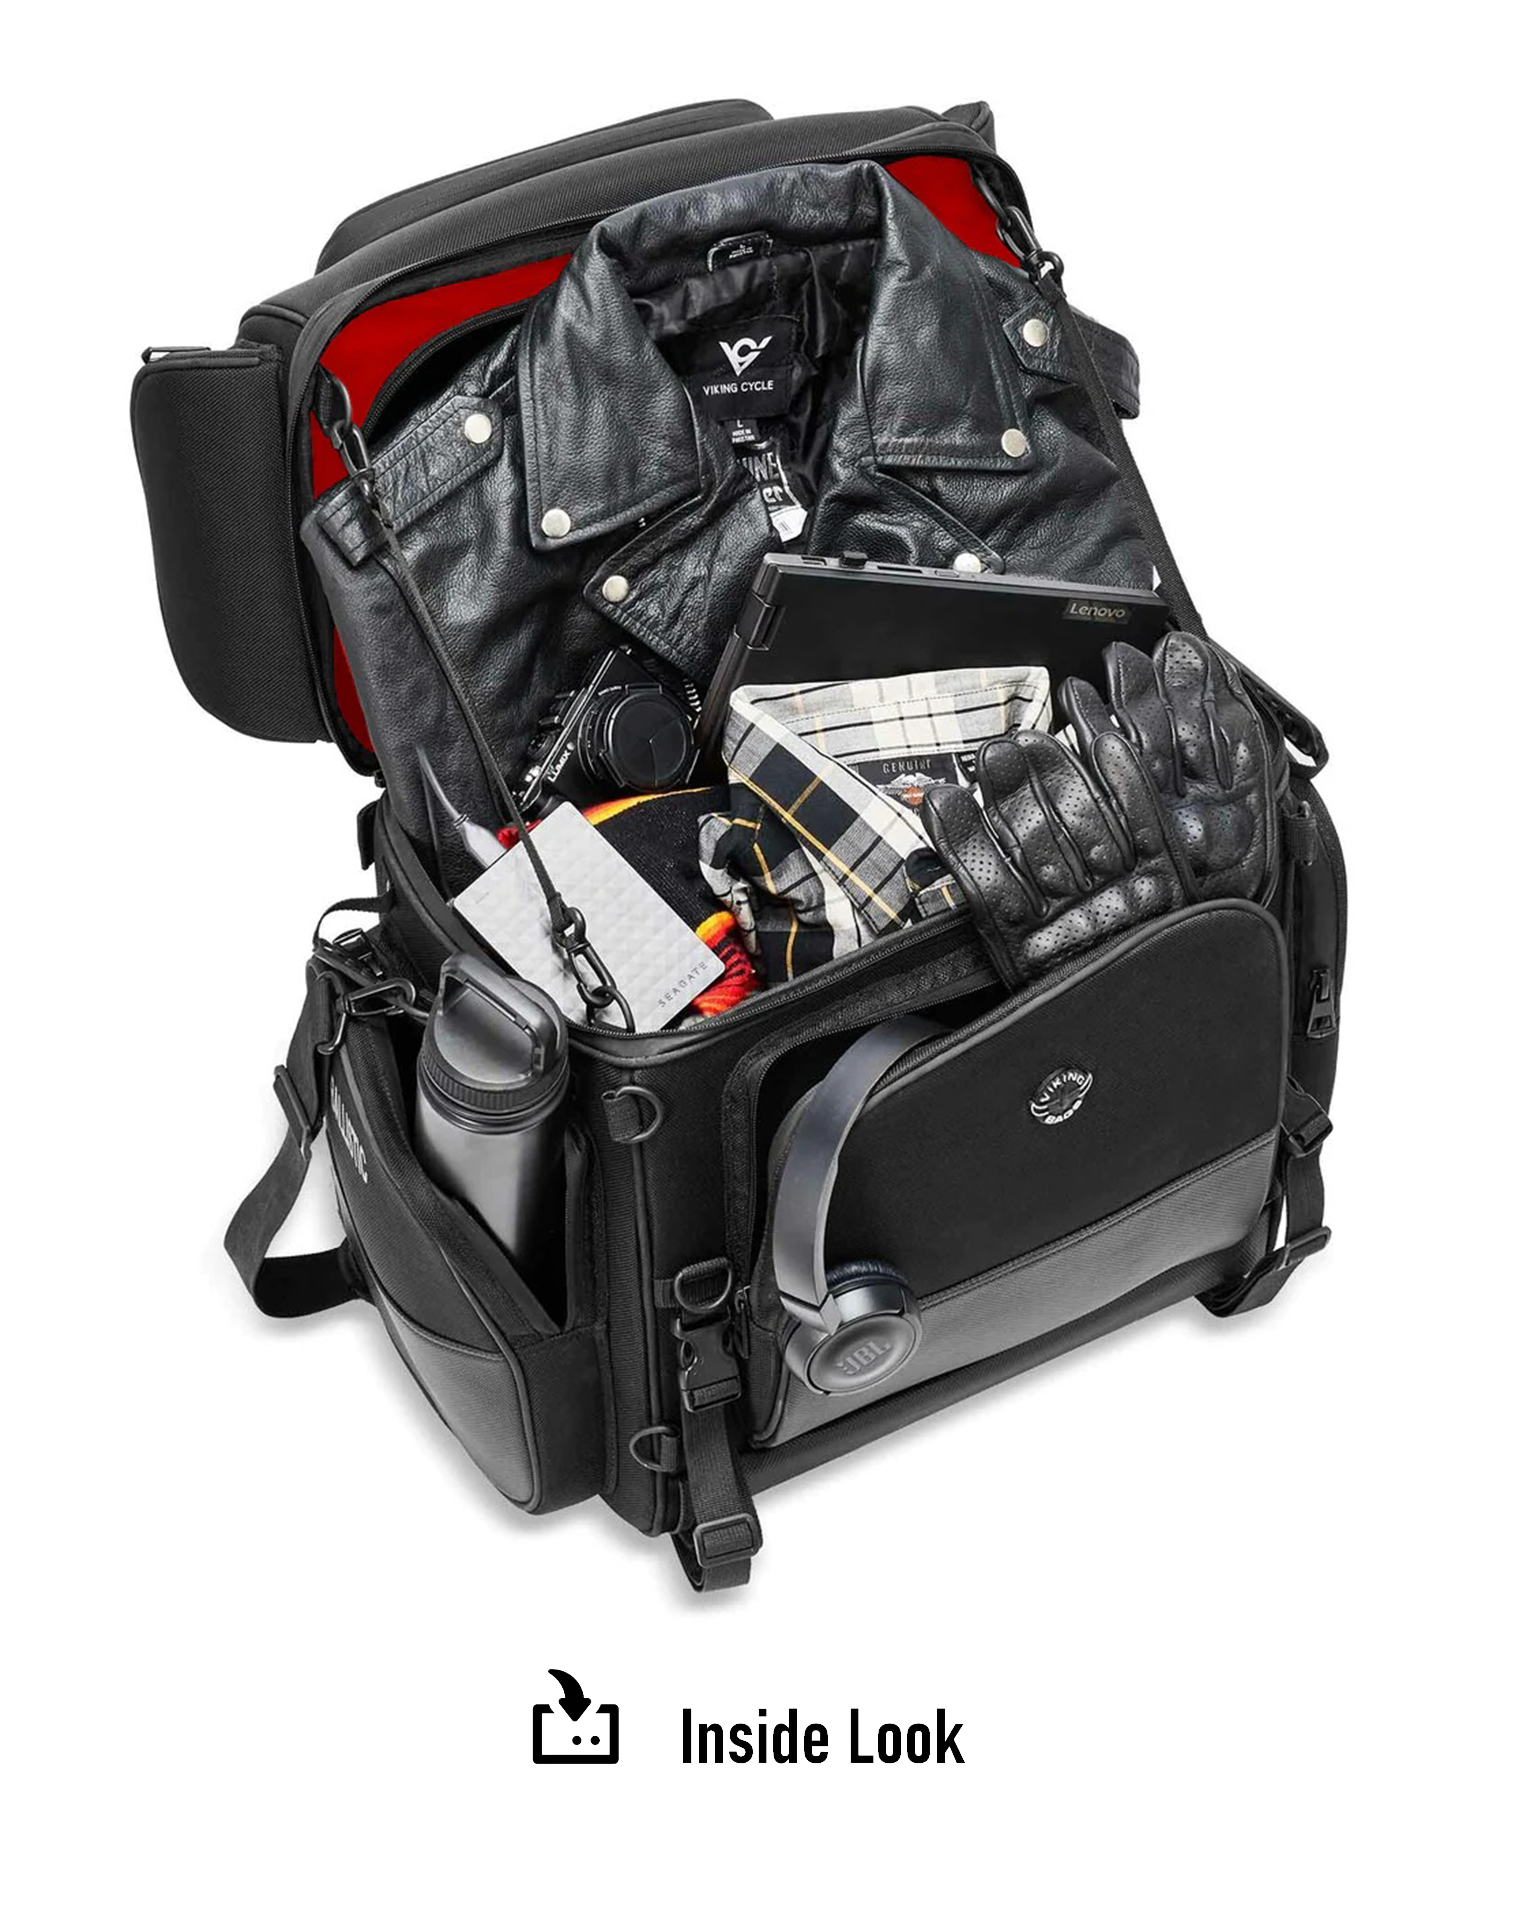 57L - Voyage Premium XL Hyosung Motorcycle Tail Bag